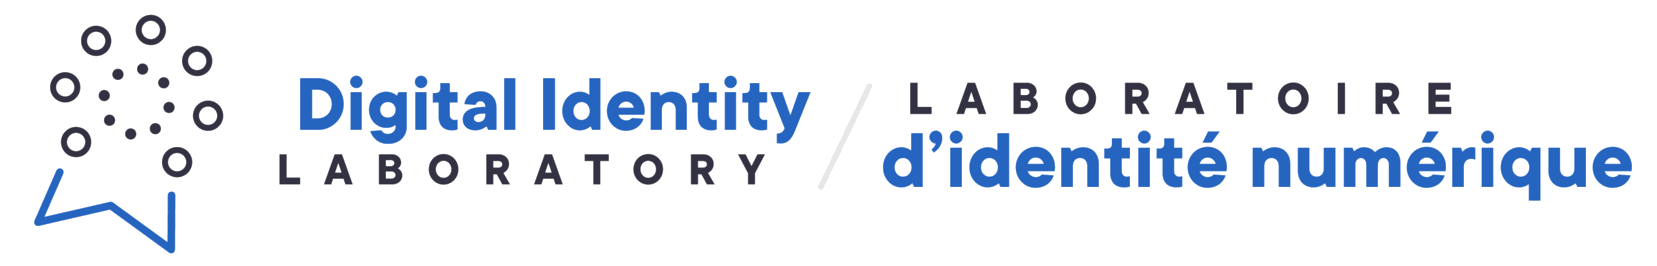 Digital Identity Laboratory of Canada